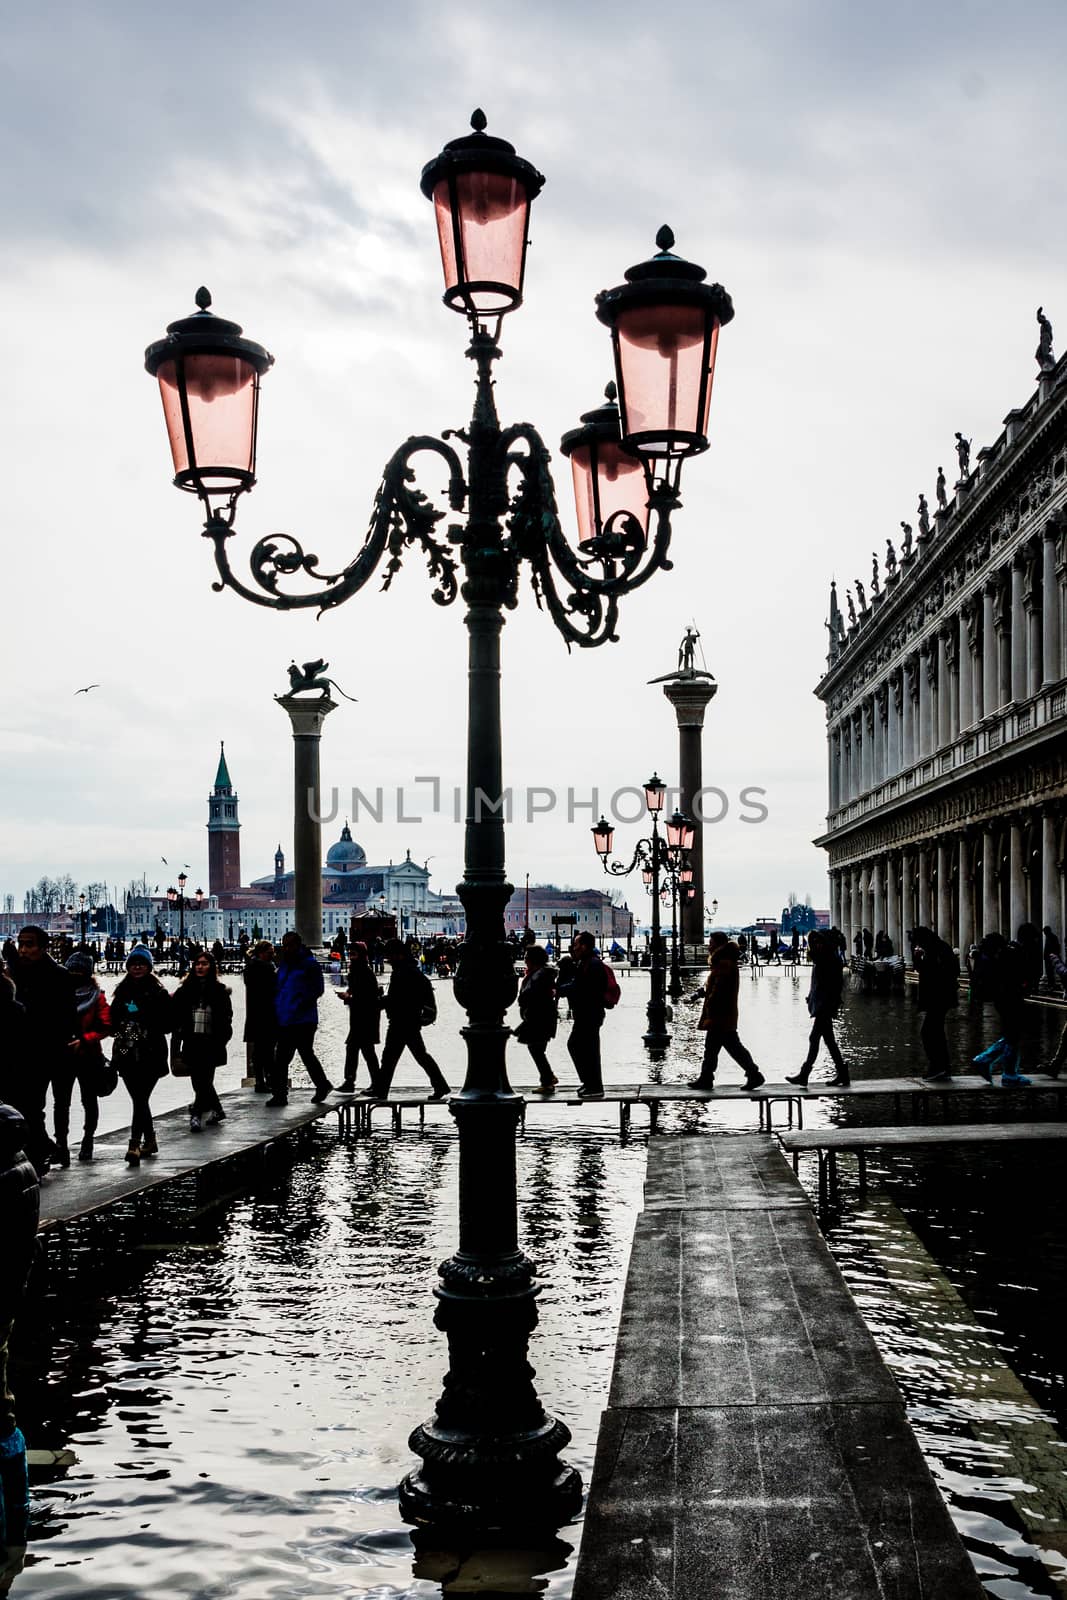 Piazza San Marco, Venice by RnDmS